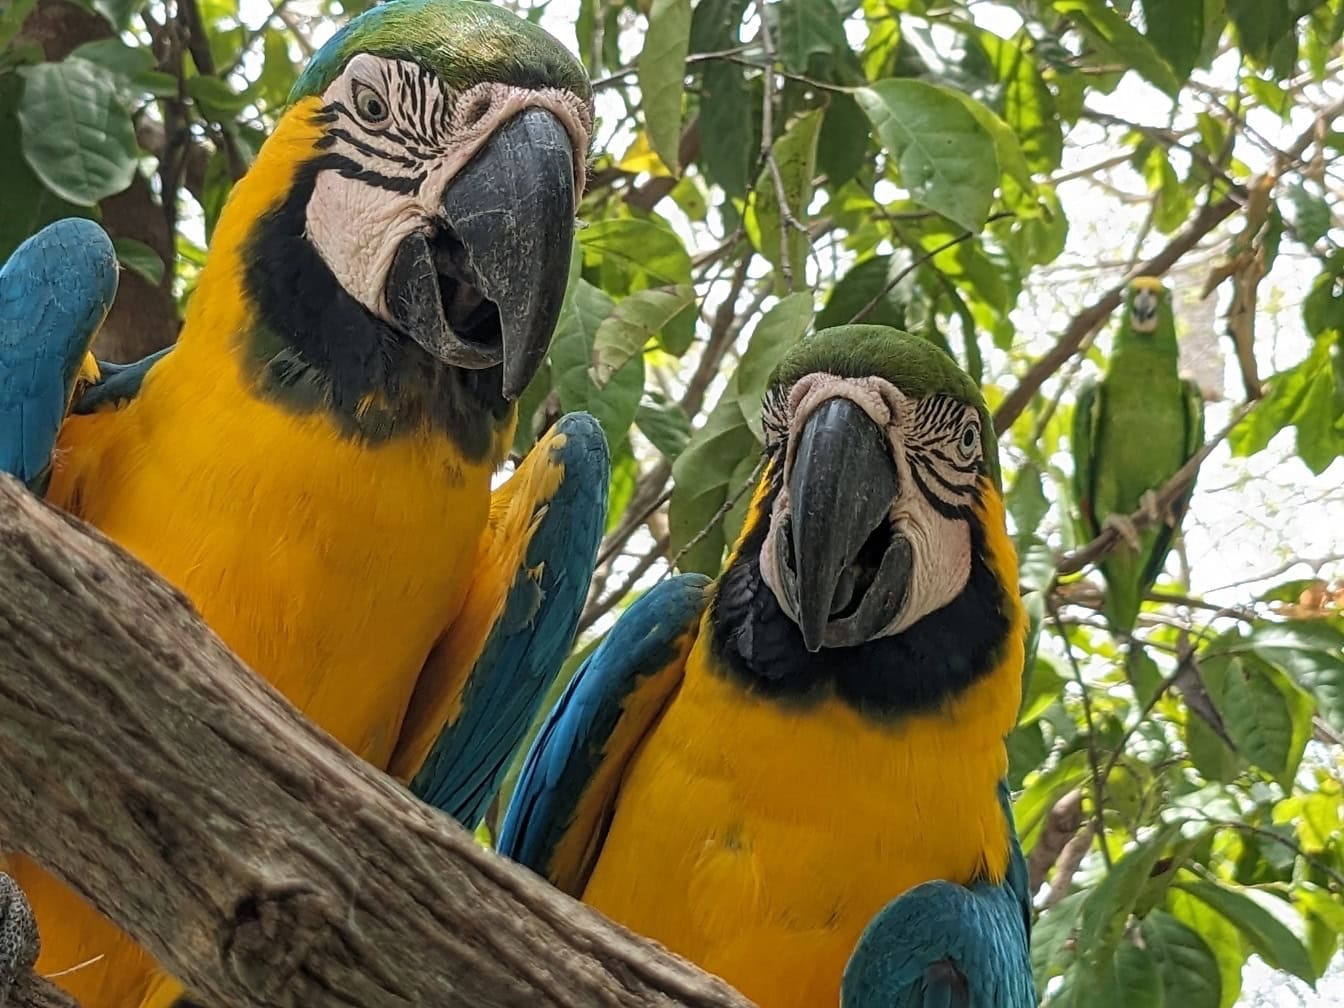 Barevný modrožlutý pták ara (Ara ararauna) známý také jako modrozlatý papoušek